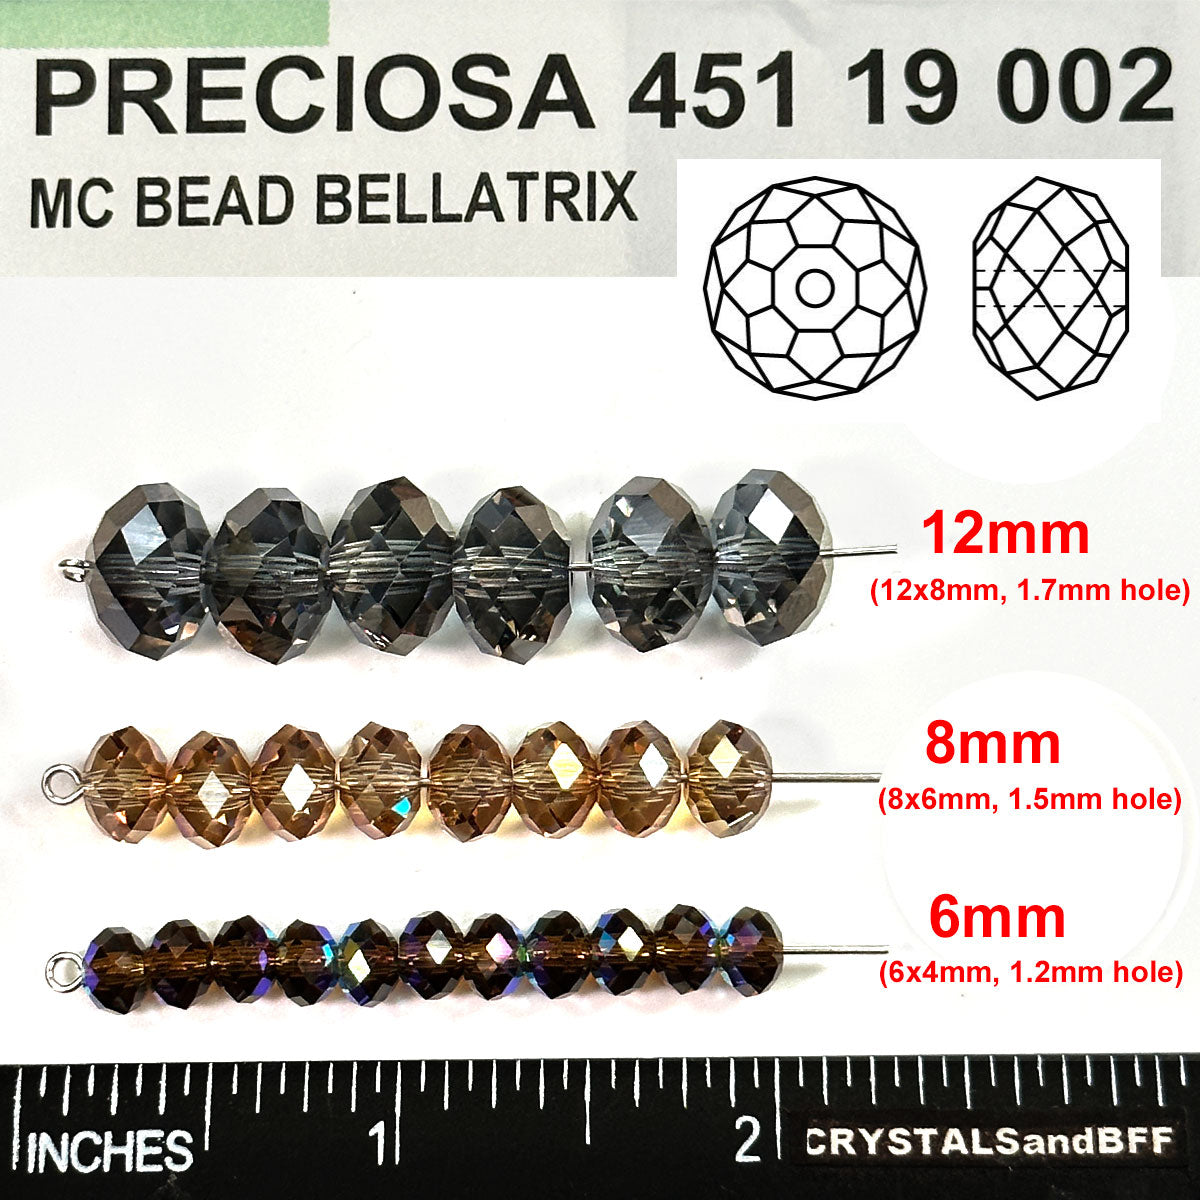 Violet AB coated Czech Machine Cut Bellatrix Crystal Beads Preciosa 451-19-002 6mm 36pcs light purple with Aurora Boreale spacer beads #5040 Briolette cut J282